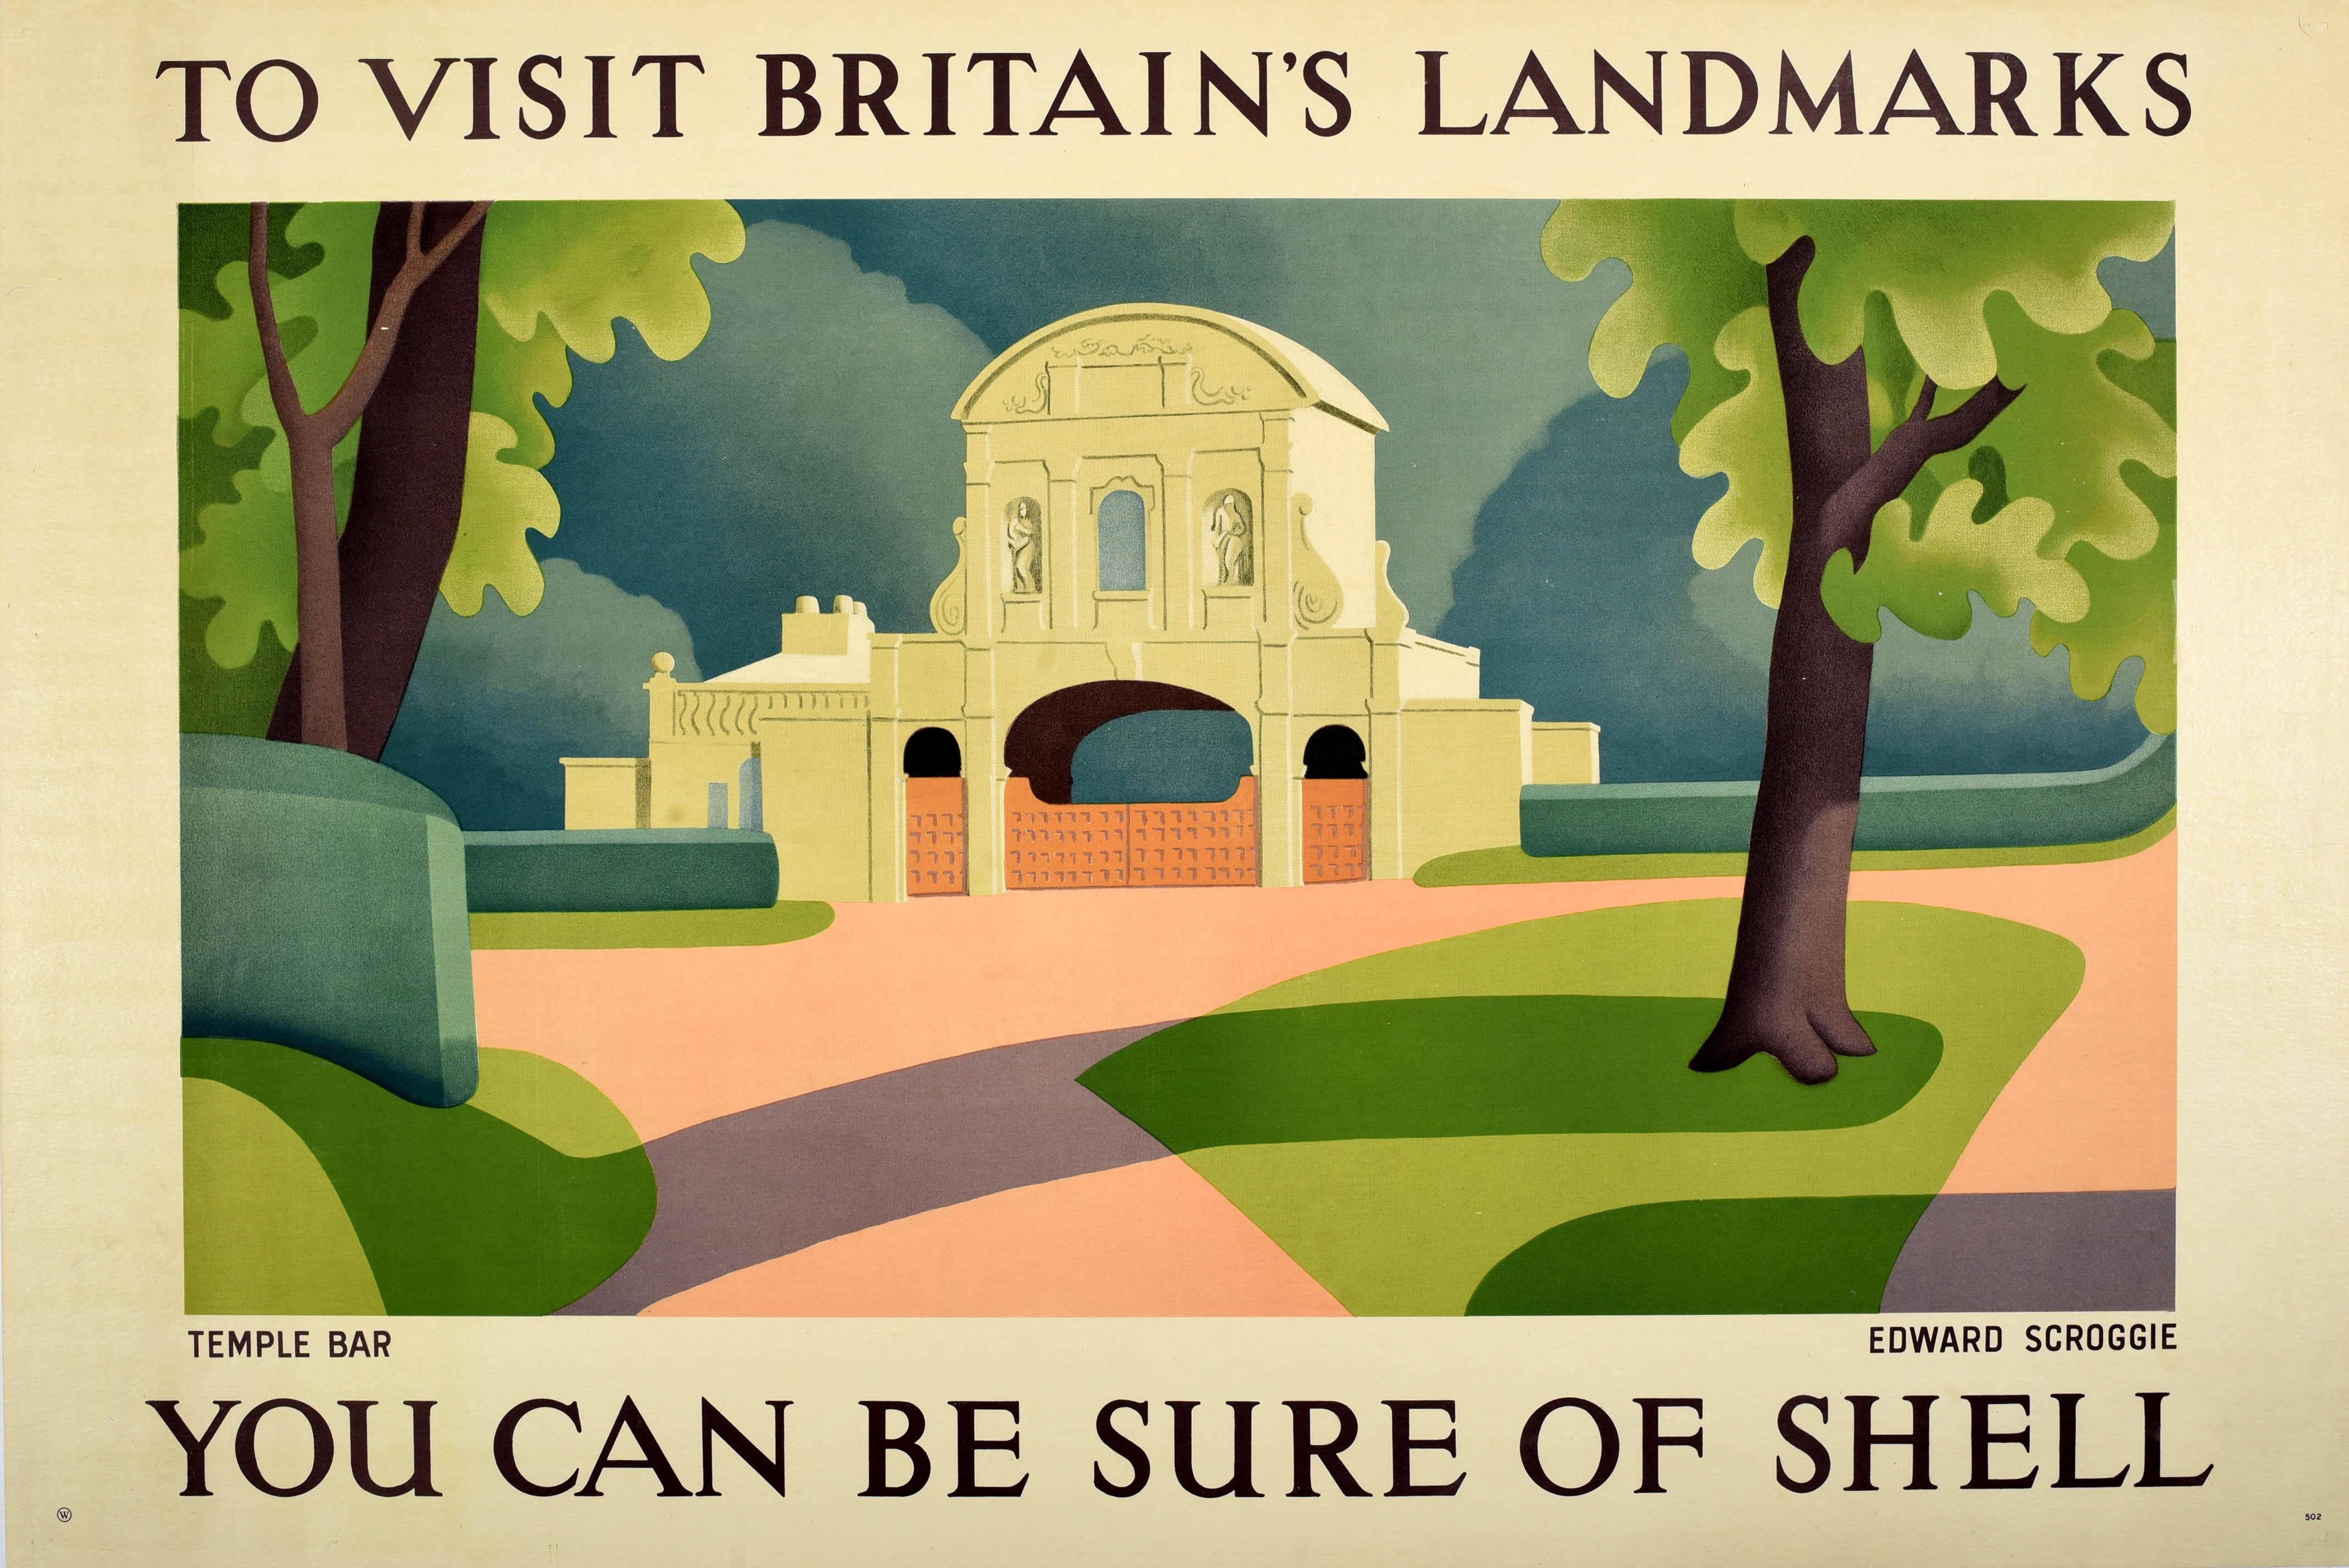 Unknown Print - Original Vintage Travel Advertising Poster Shell British Landmarks London Temple